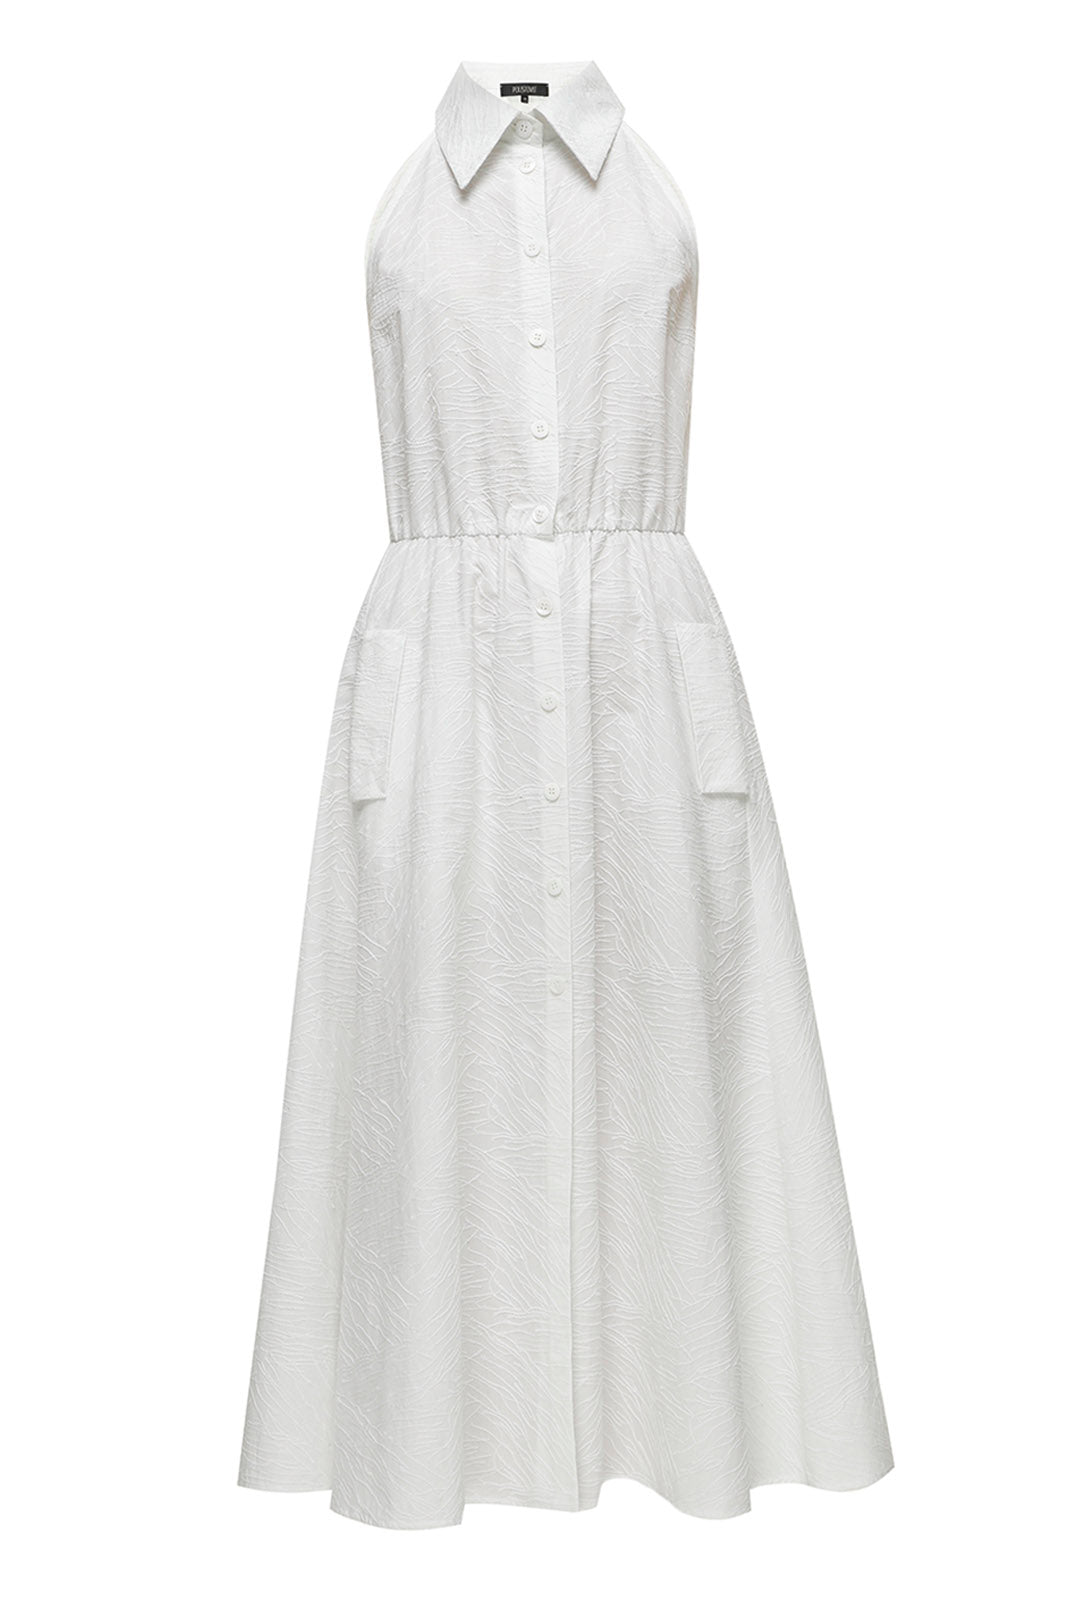 Біла сукня